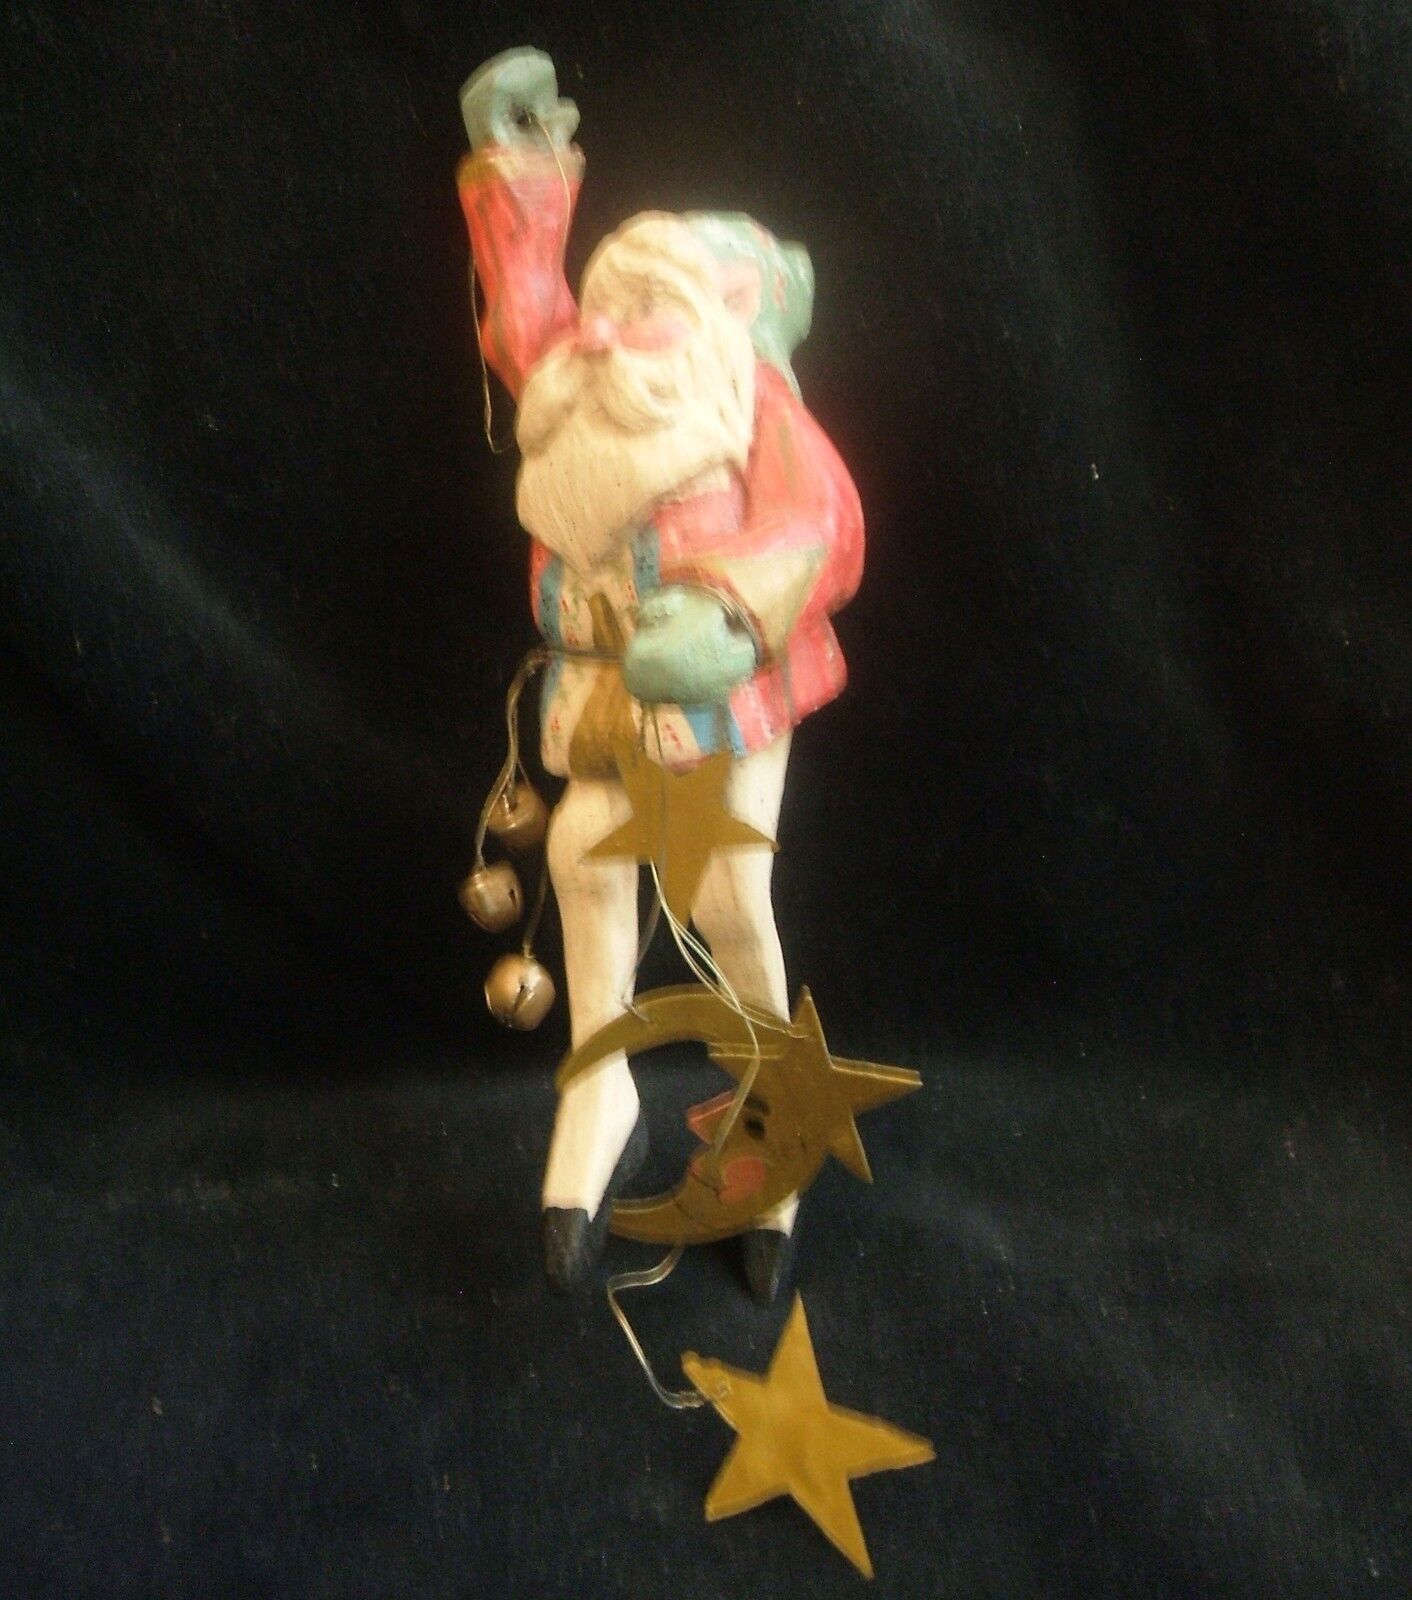 Vintage 1988 Wood Hand Painted Santa Elf Ornament Designed by Denise Calla Stars